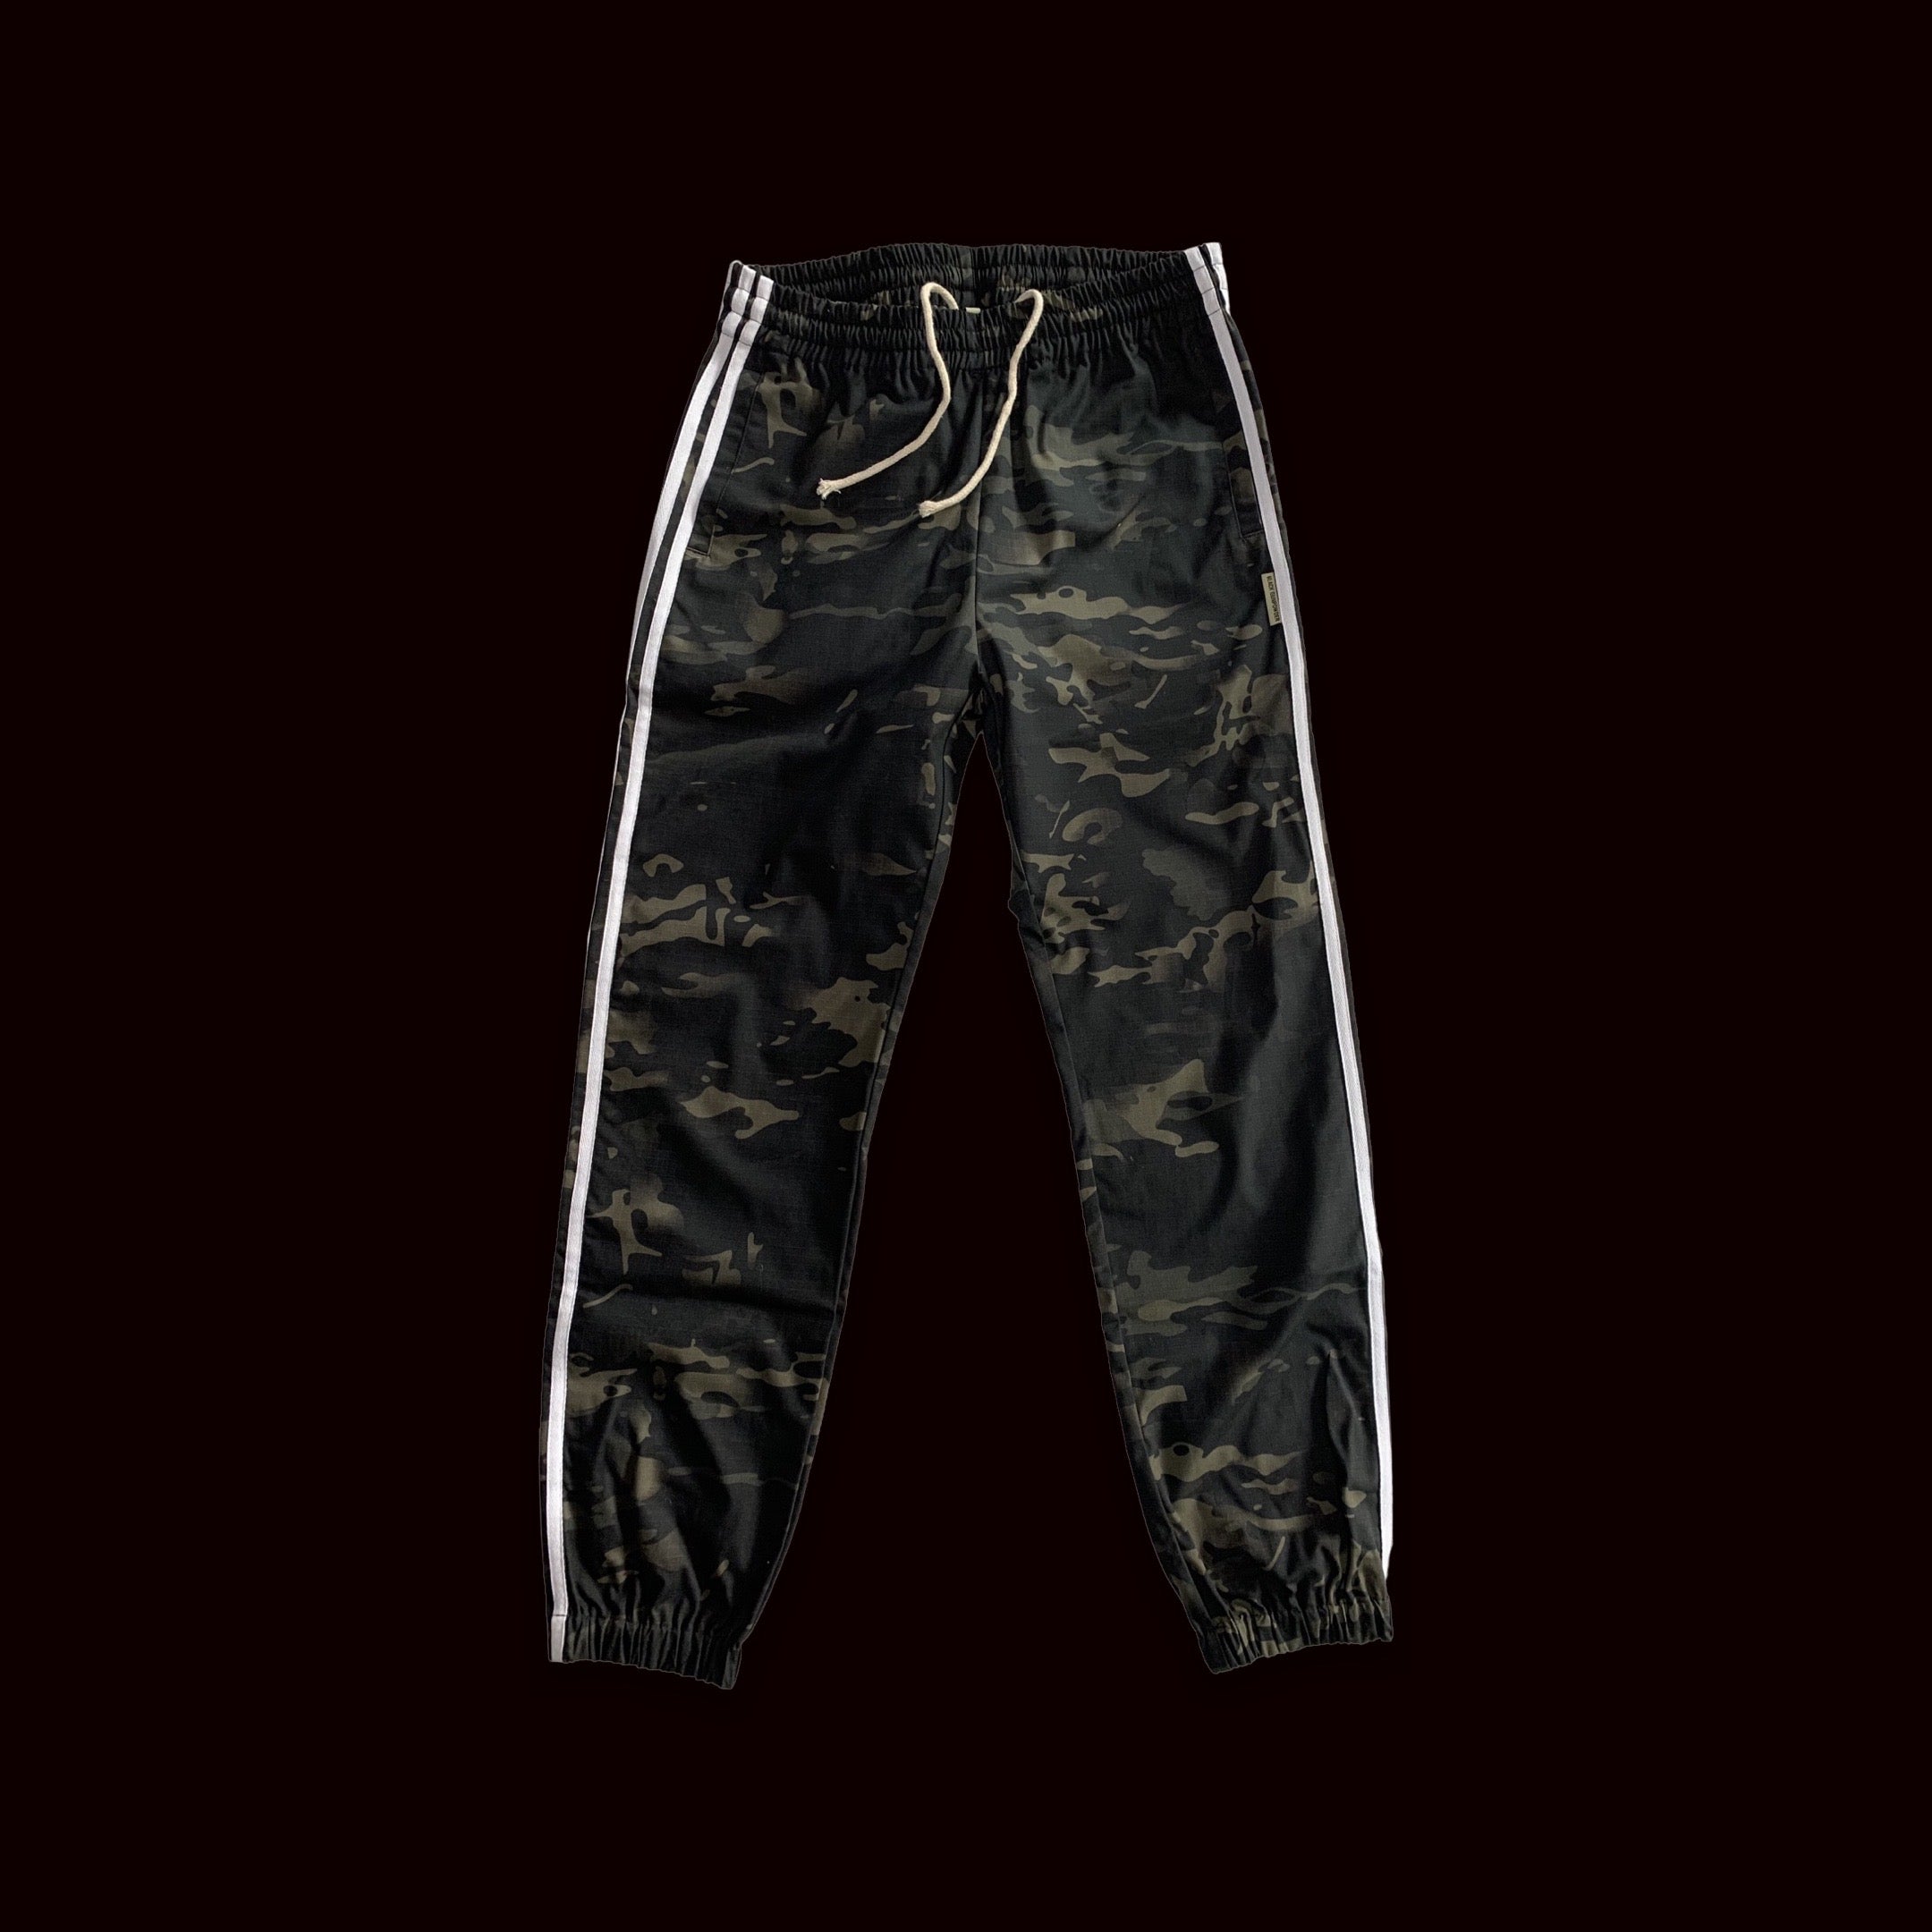 Gopnik - Squatting Slav Black Multicam Track Suit (Pants Only)